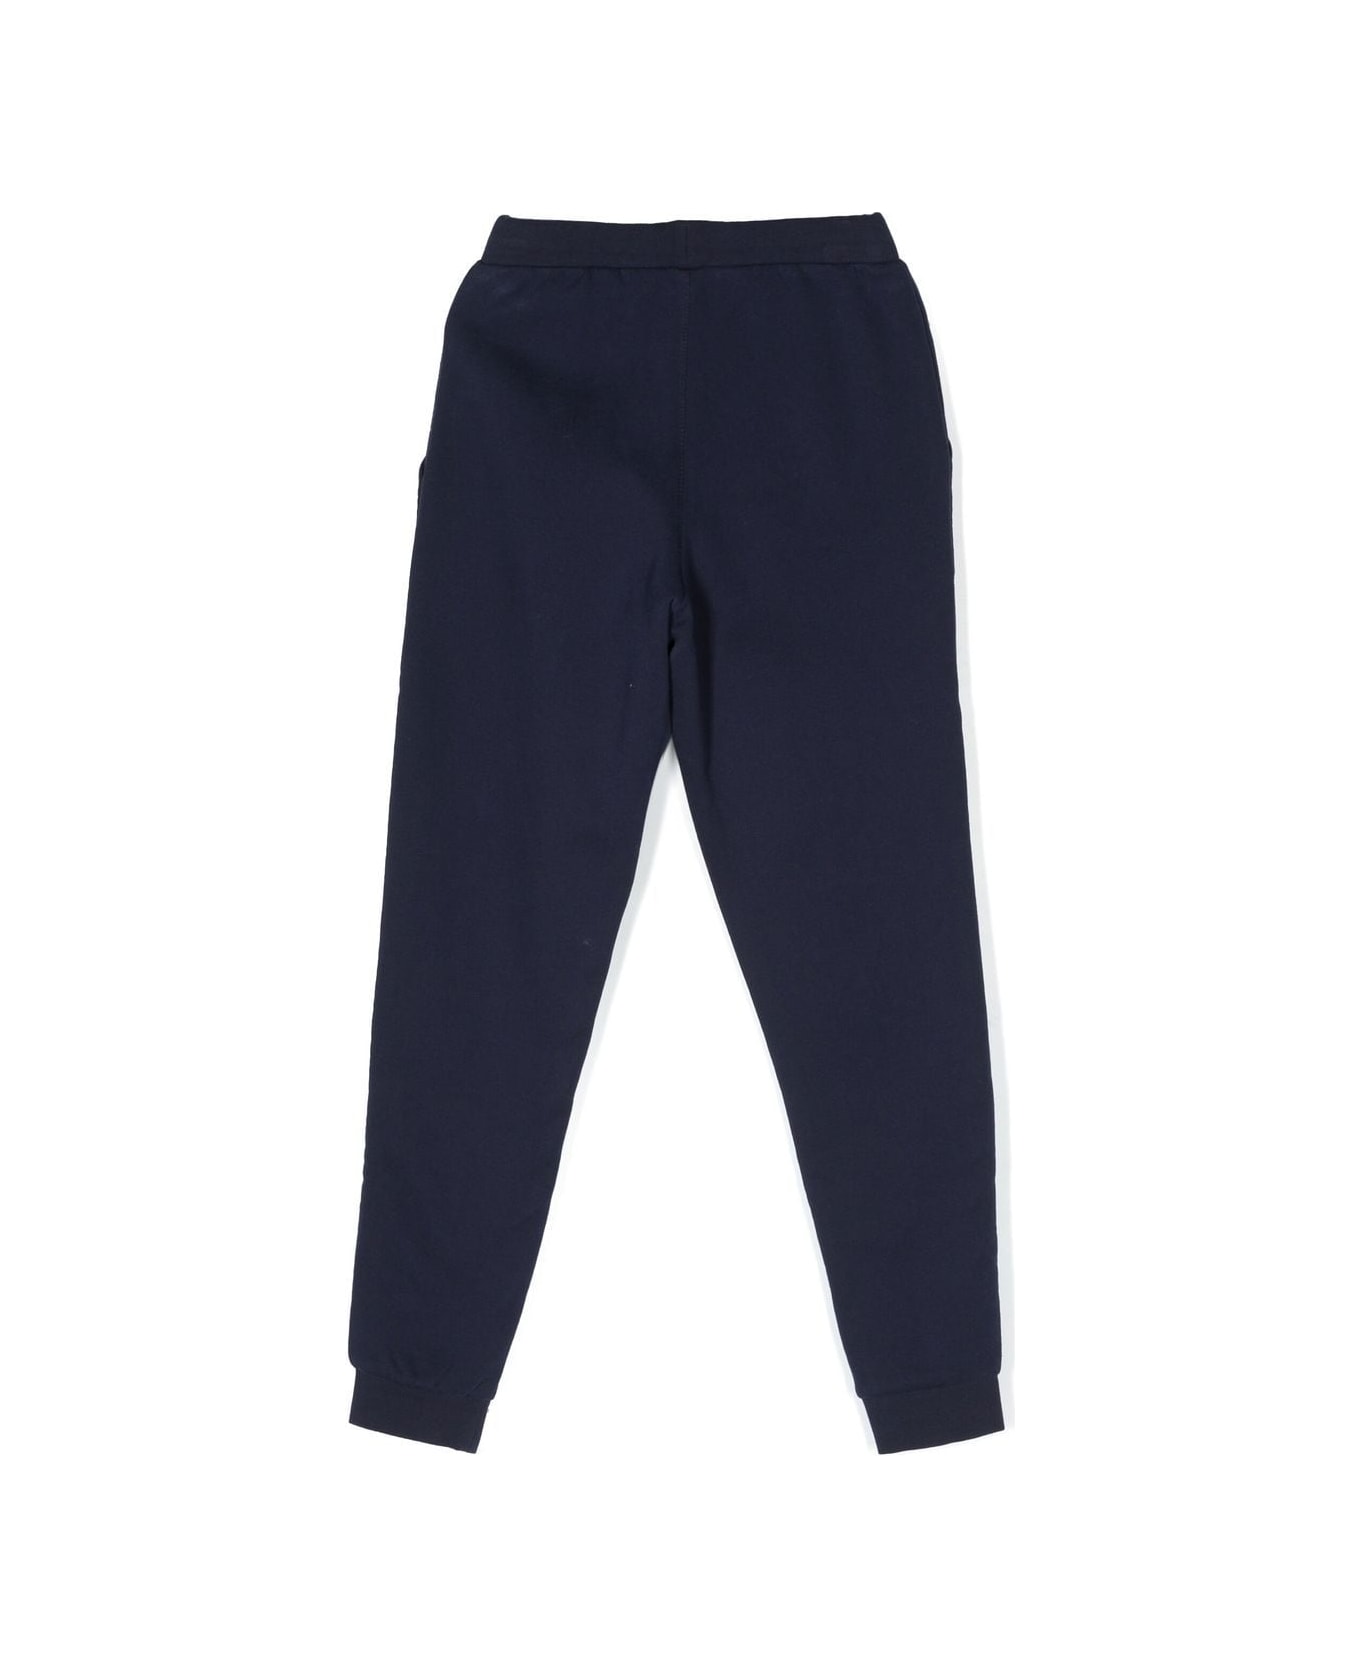 Timberland Pantalone Blu Navy In Felpa Di Cotone Bambino - Blu